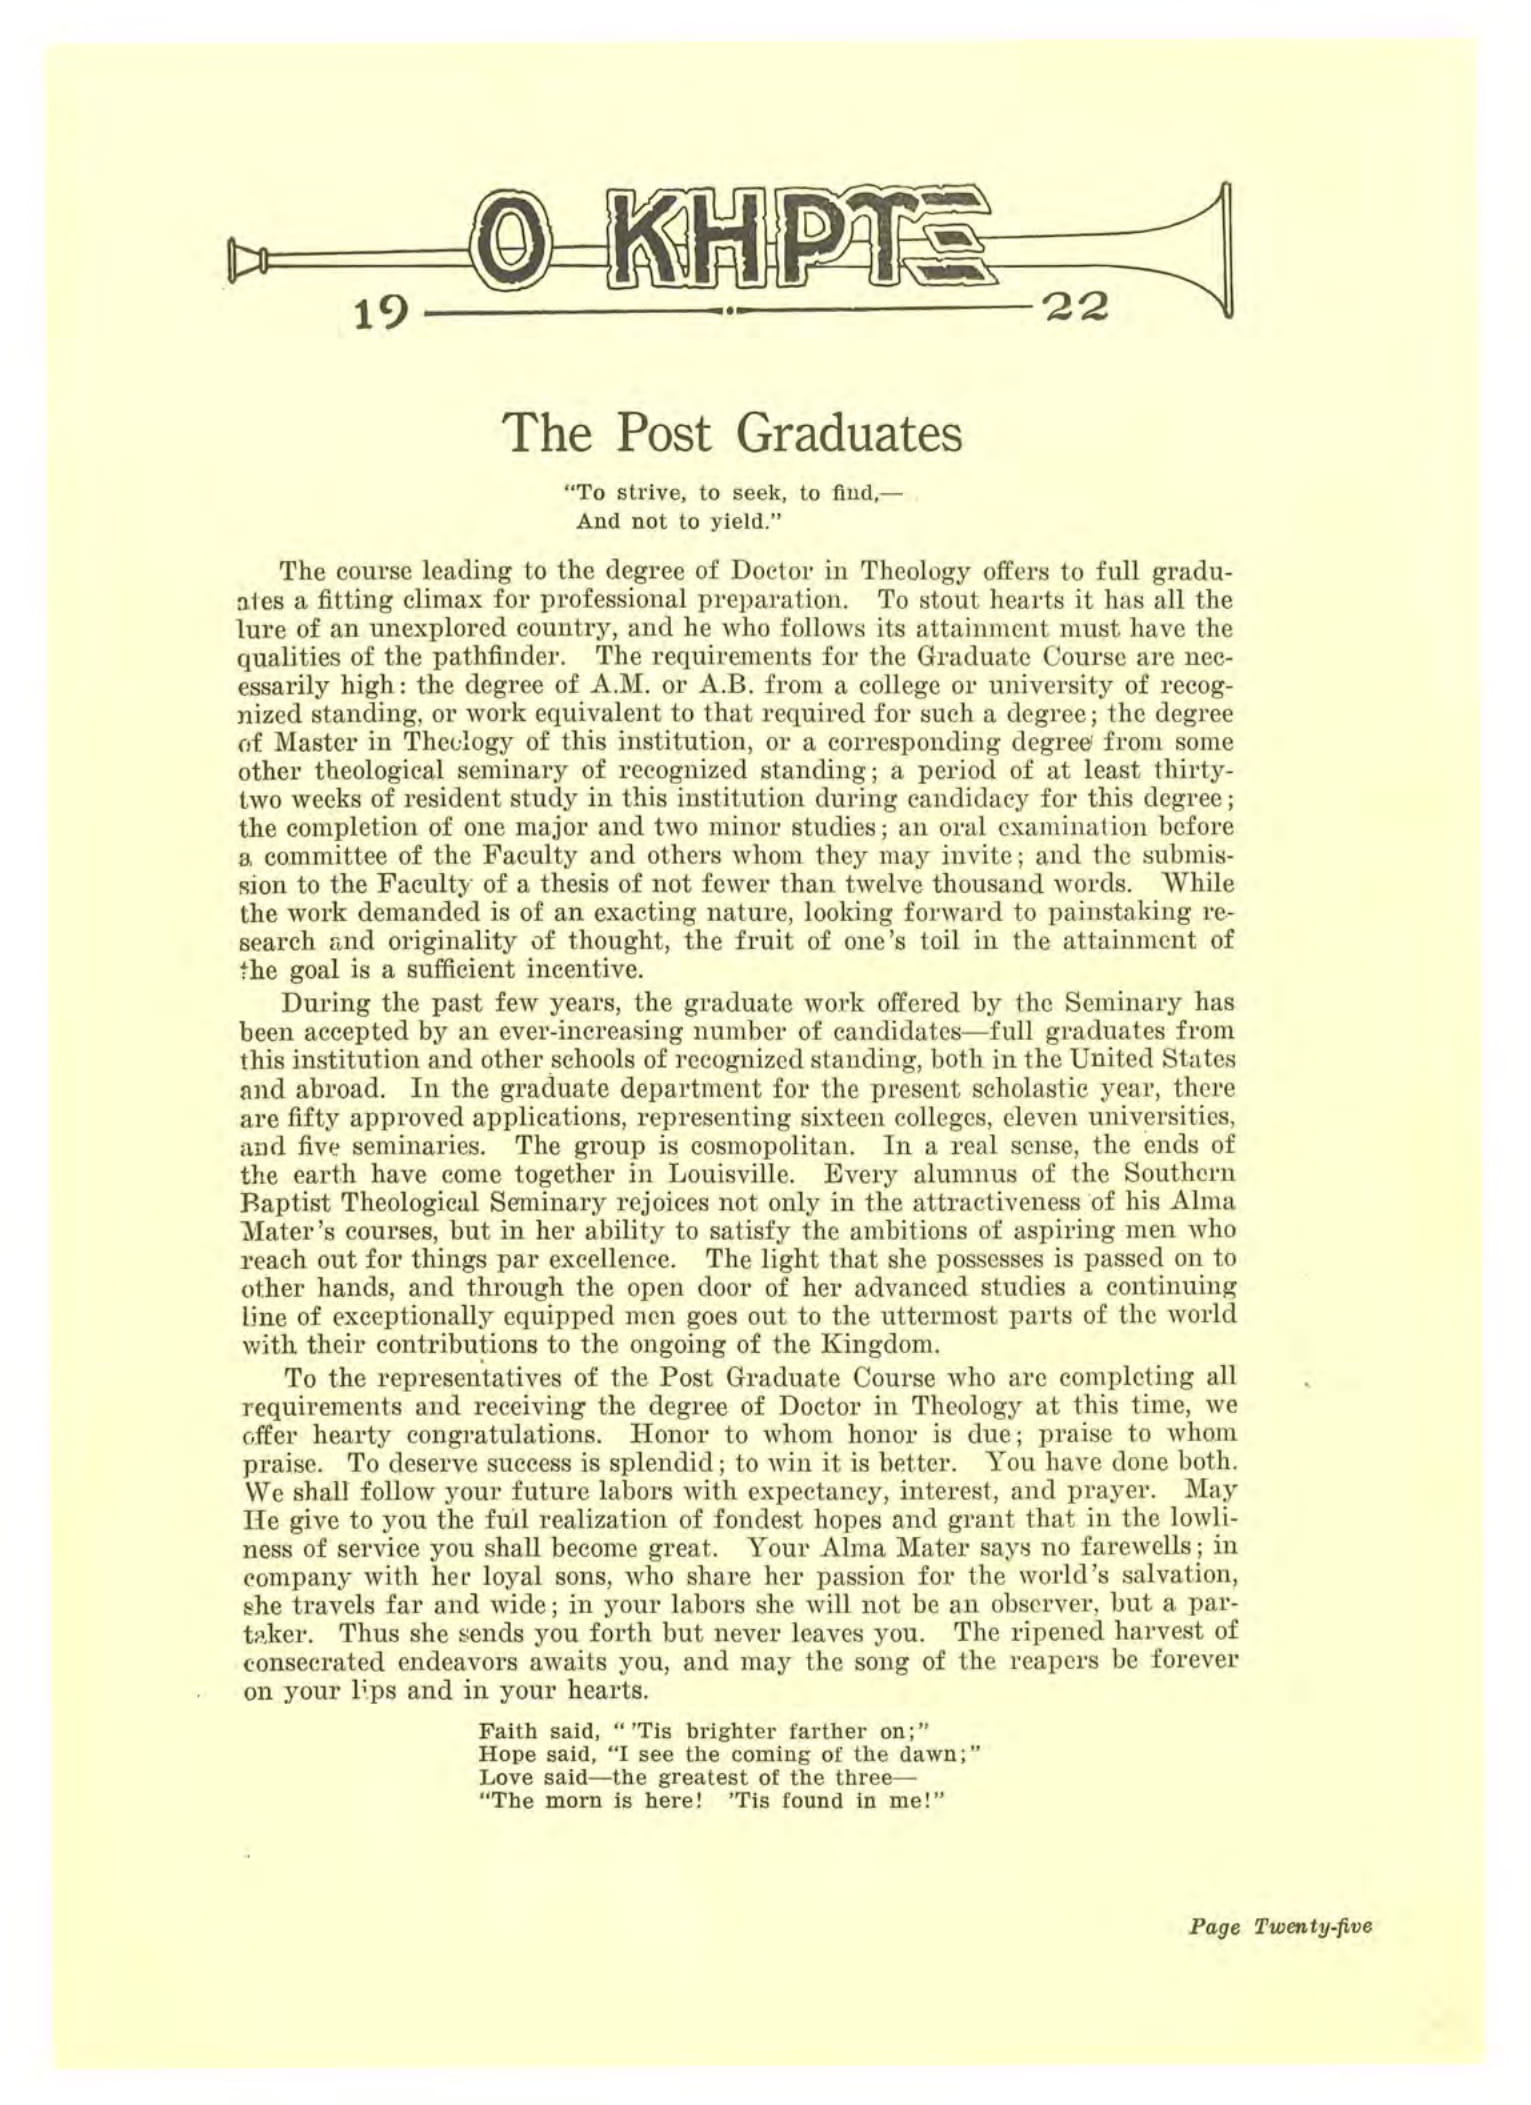 Southern Seminary annual (O Kerux) 1922-029.jpg